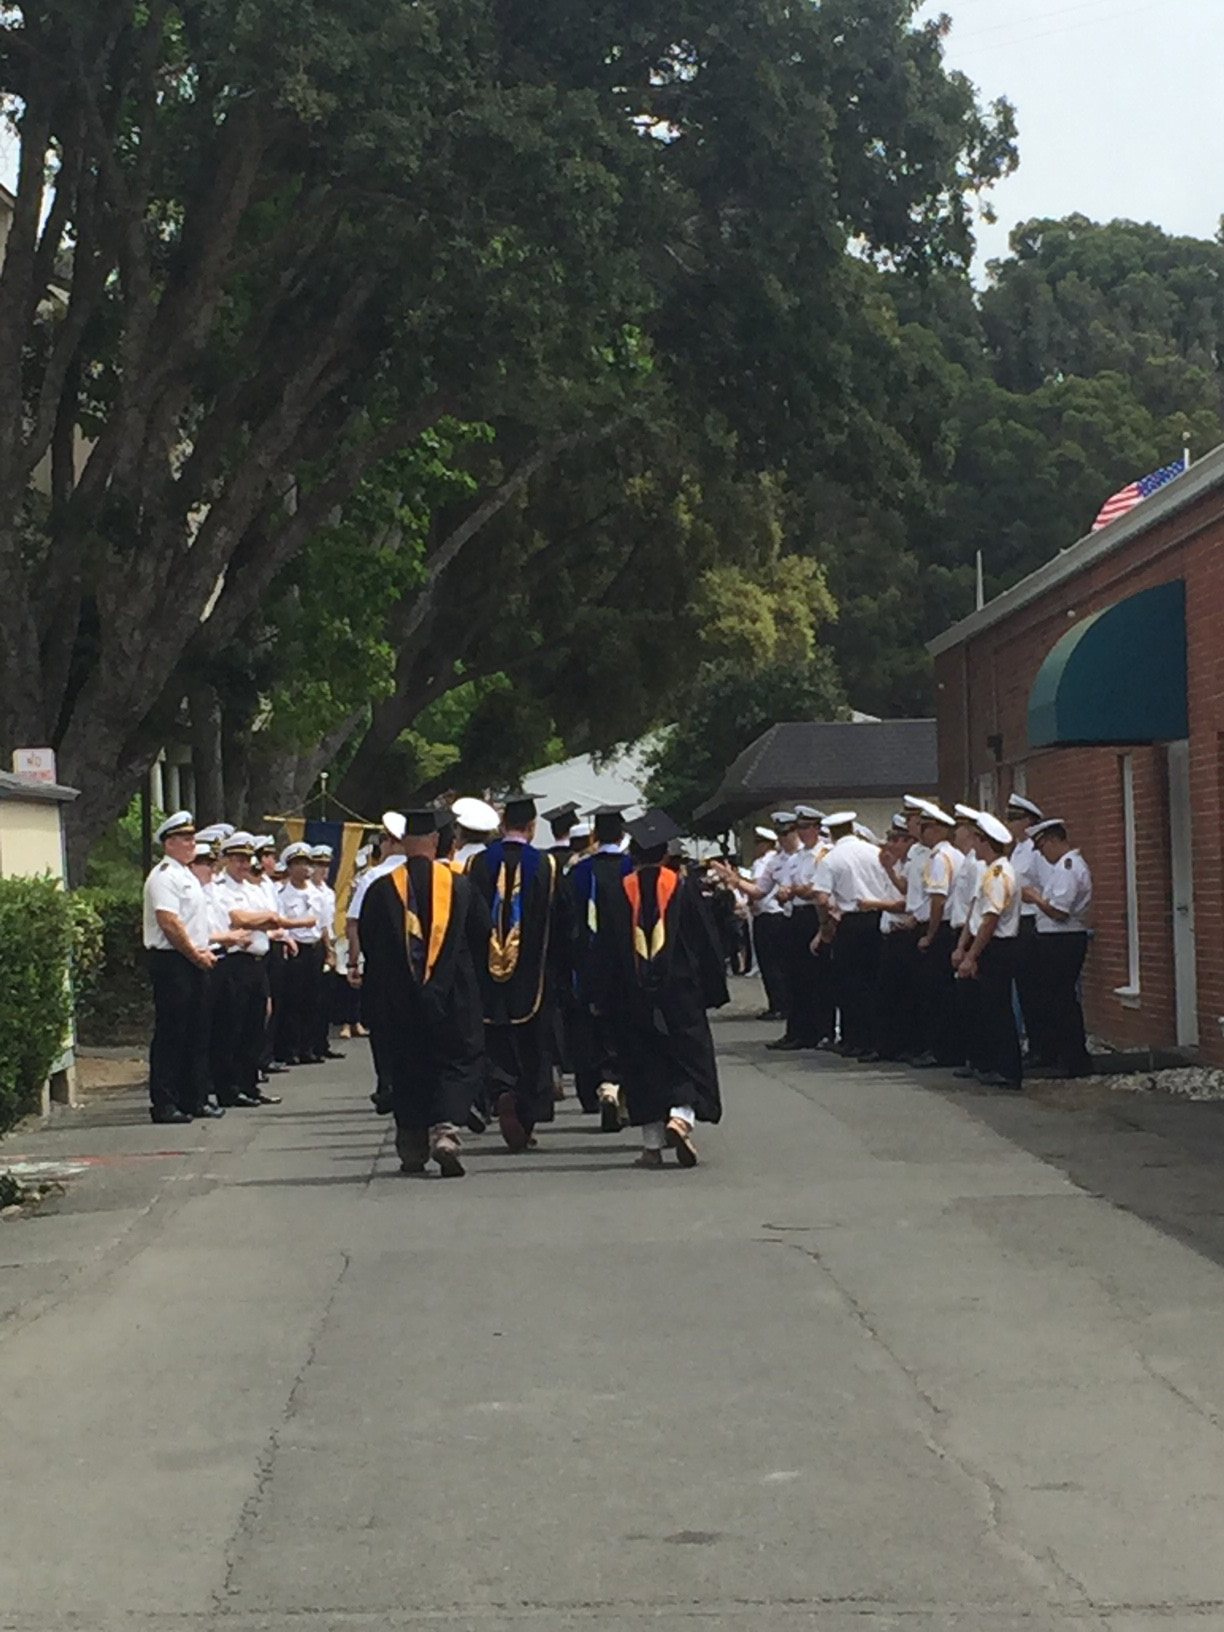 Graduating cadets walking down street